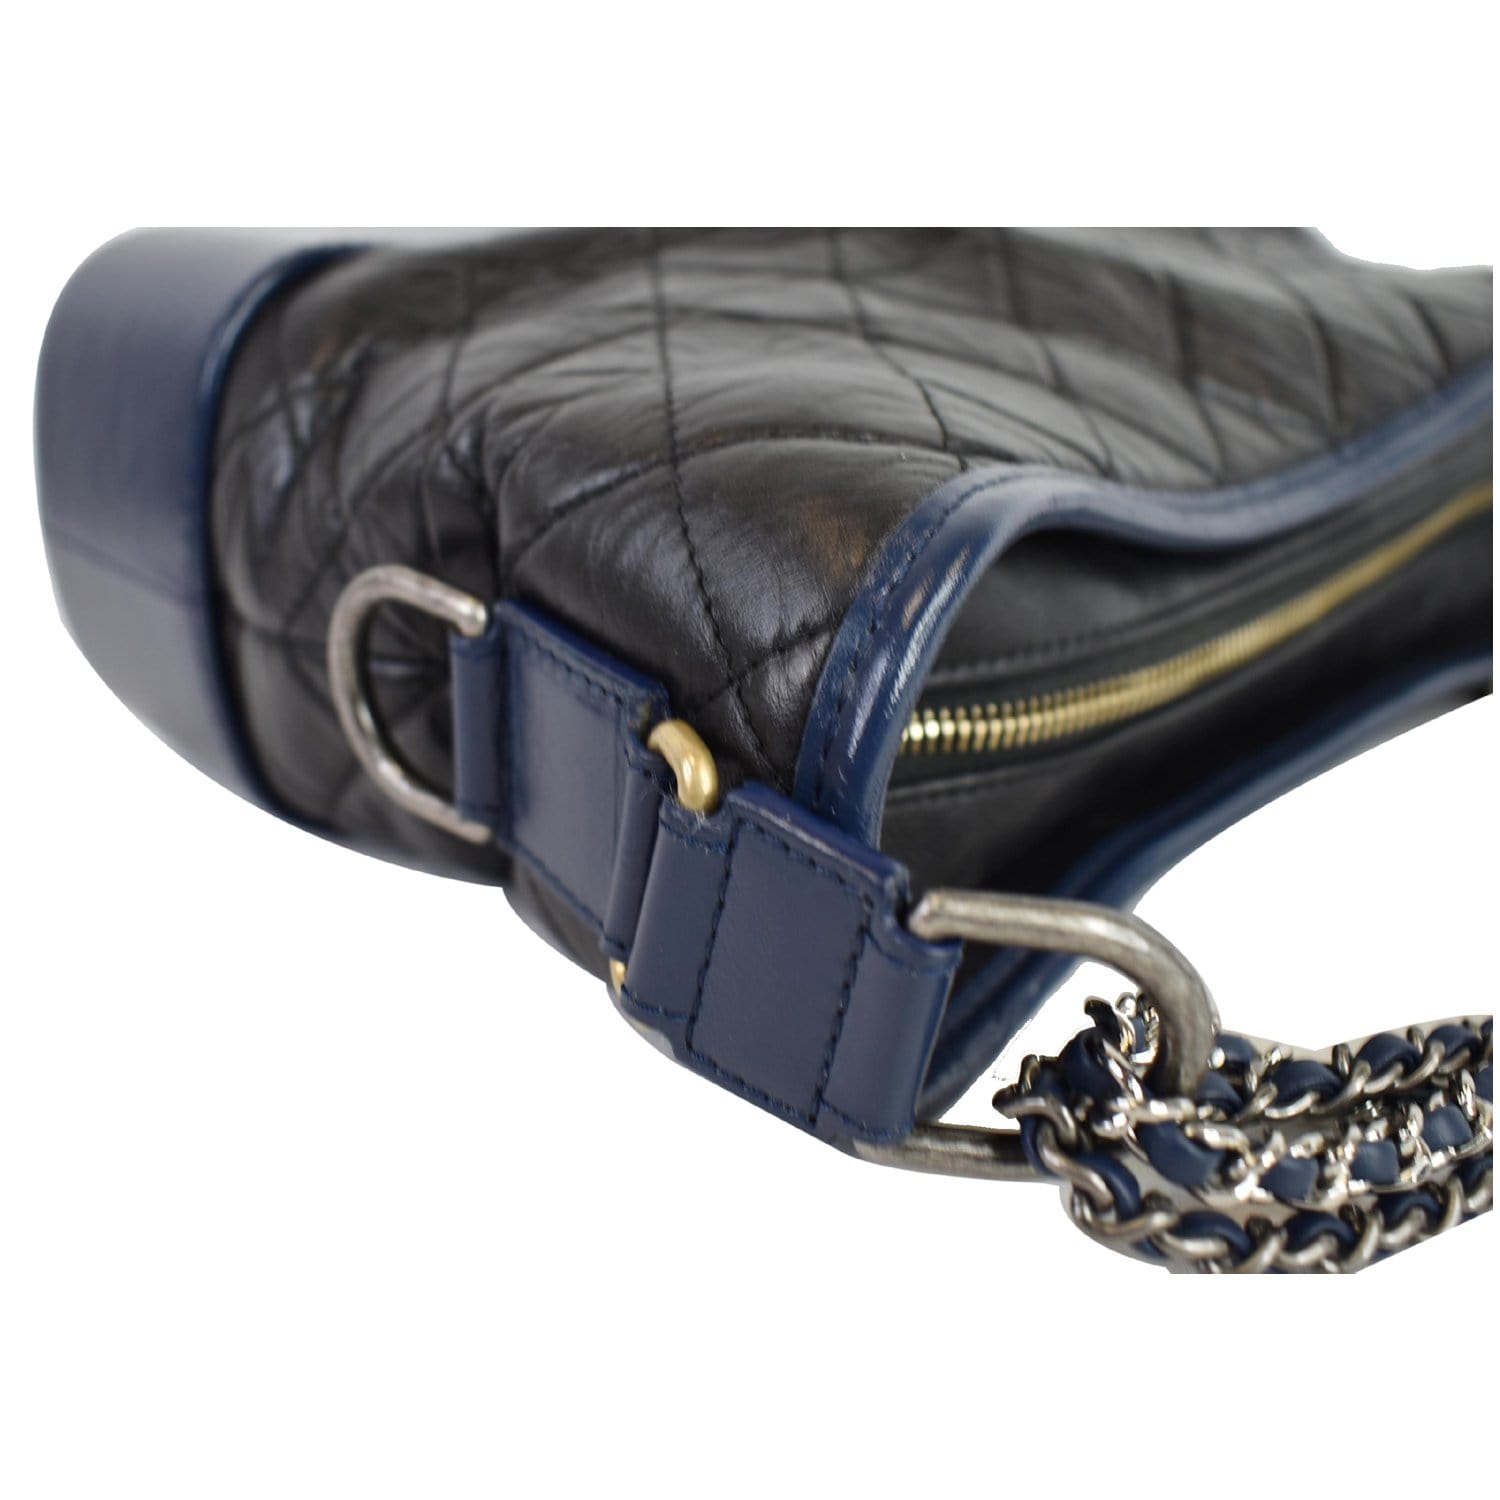 Chanel Gabrielle Hobo Bag Authentic Black